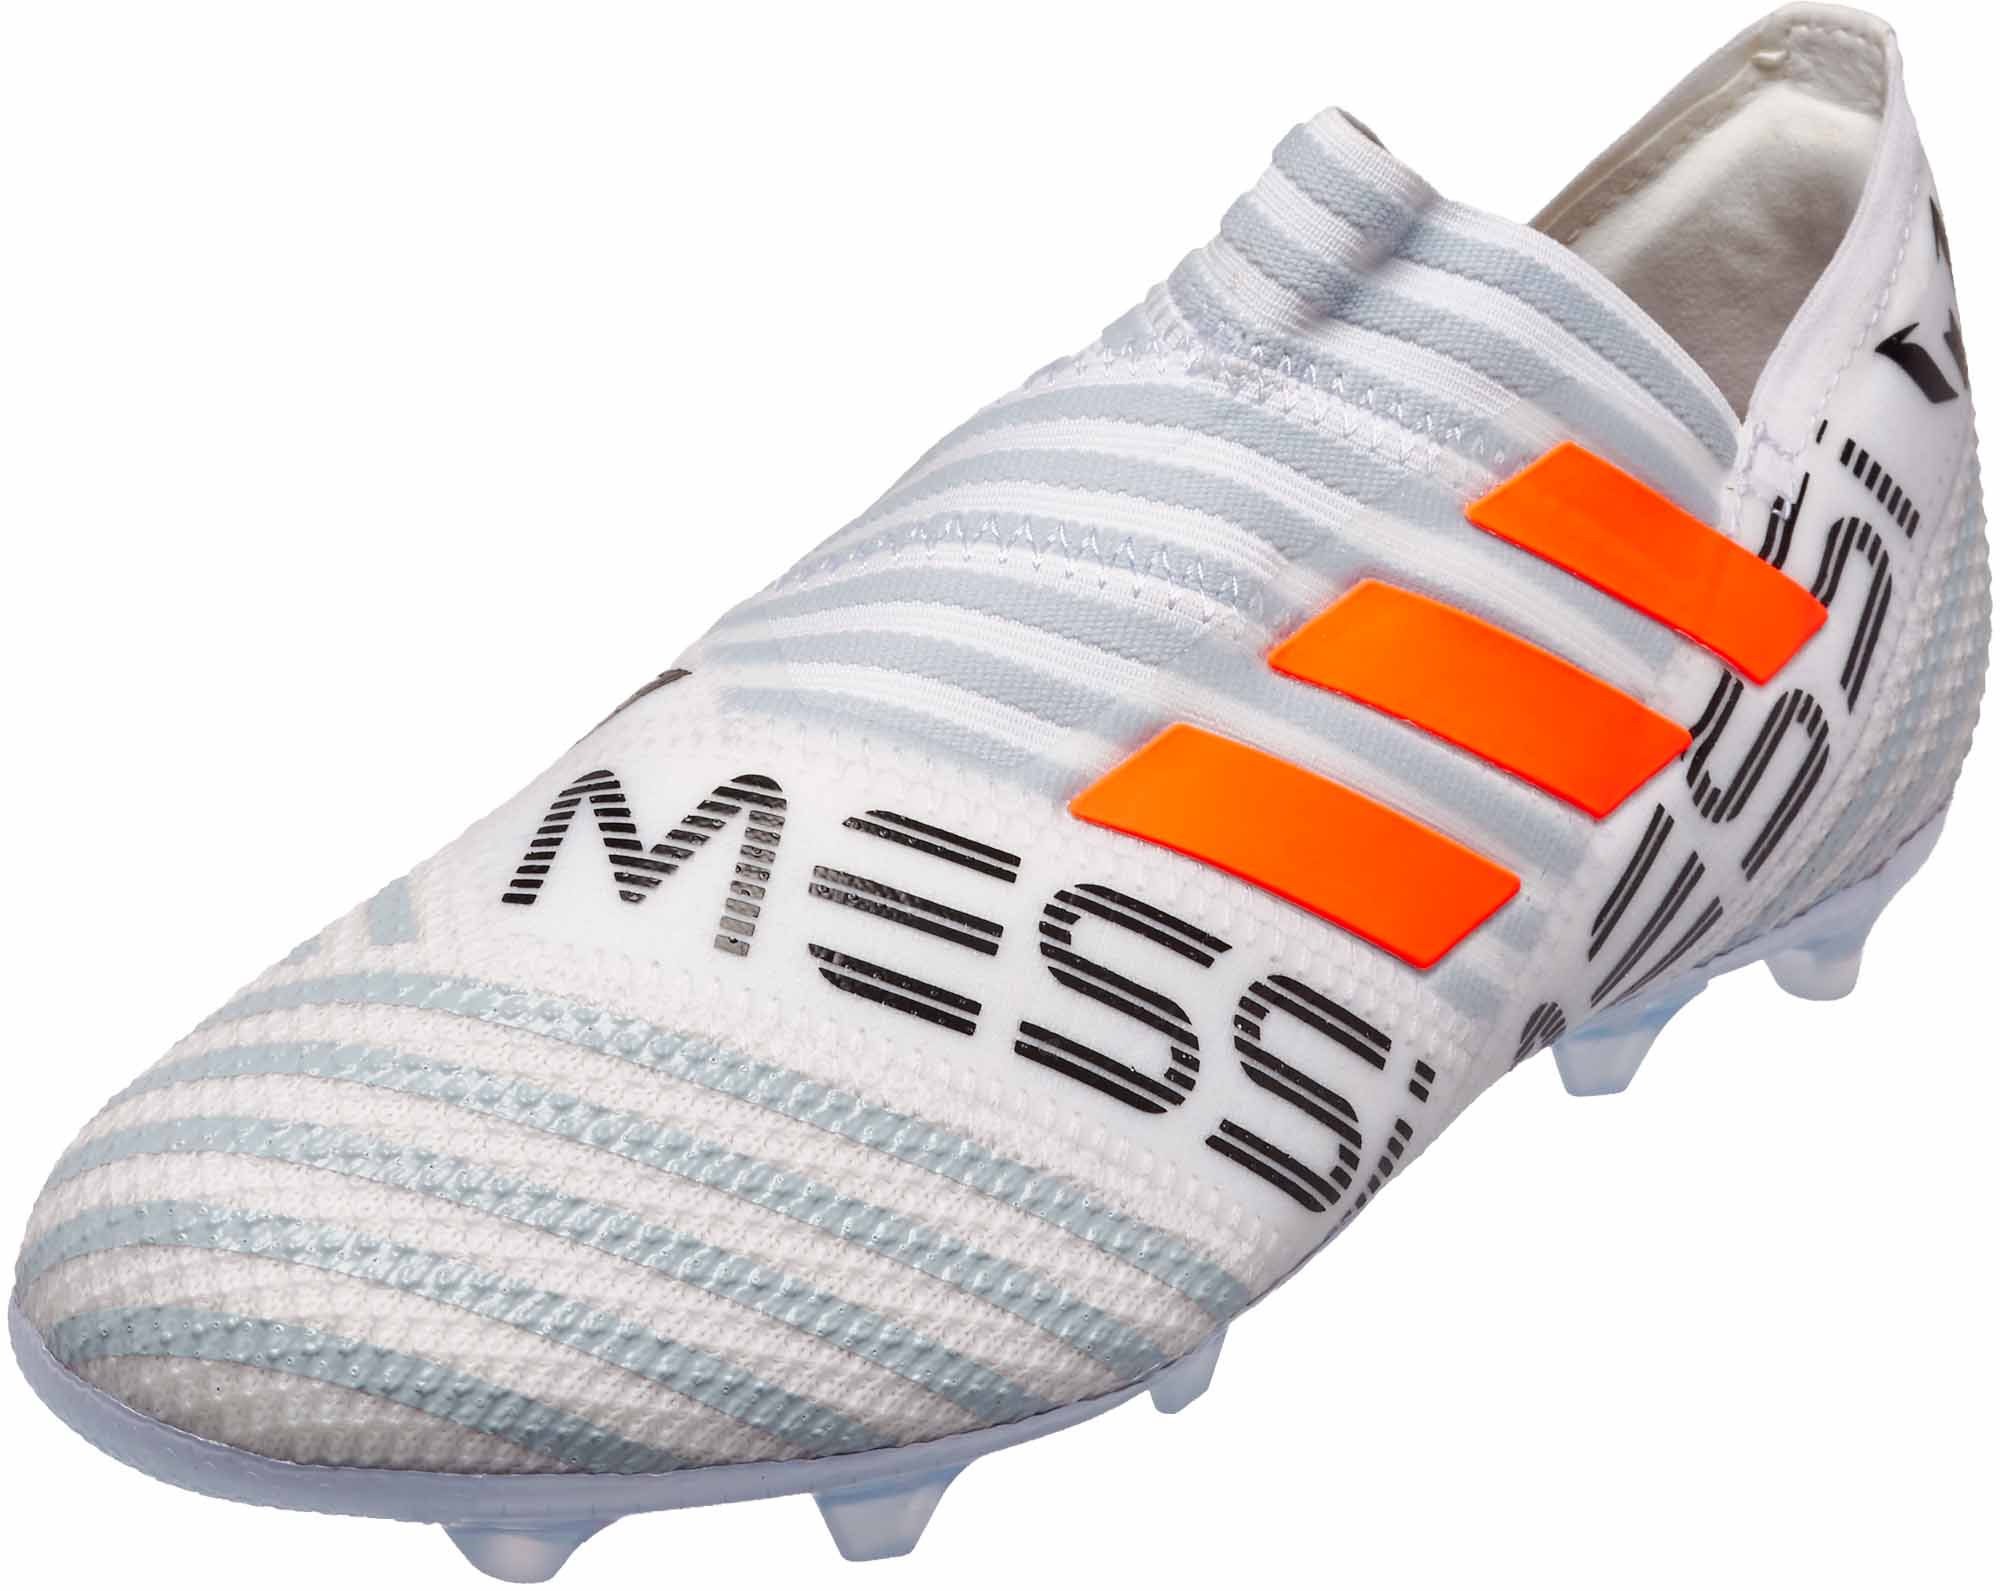 Kids adidas Nemeziz Messi 17+ 